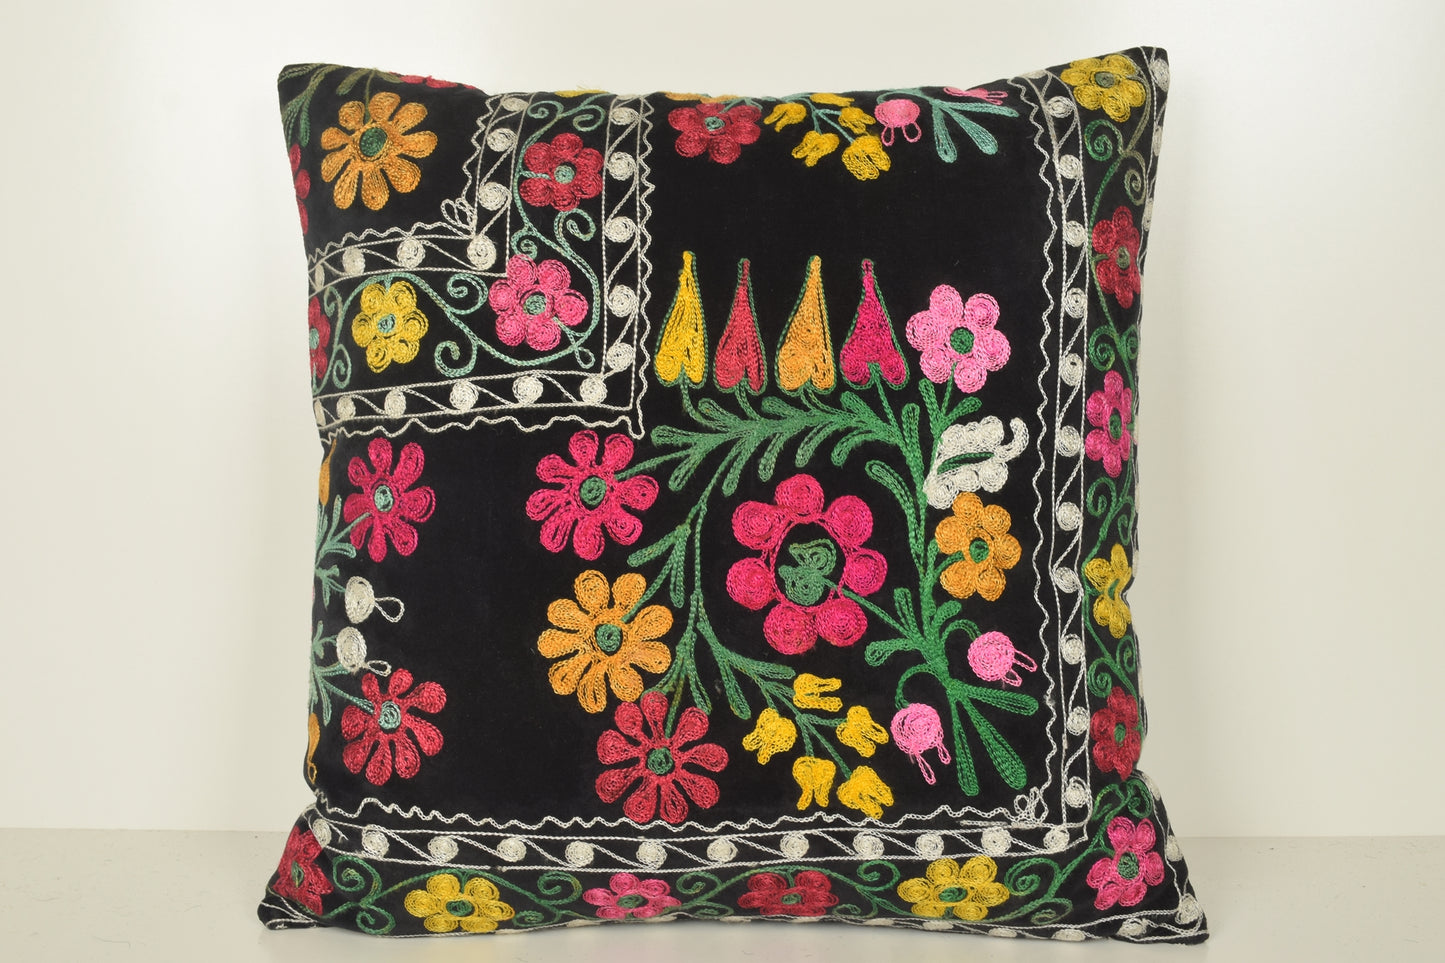 Discount Suzani Pillows A01033 24x24 Primitive Folk art Crochet